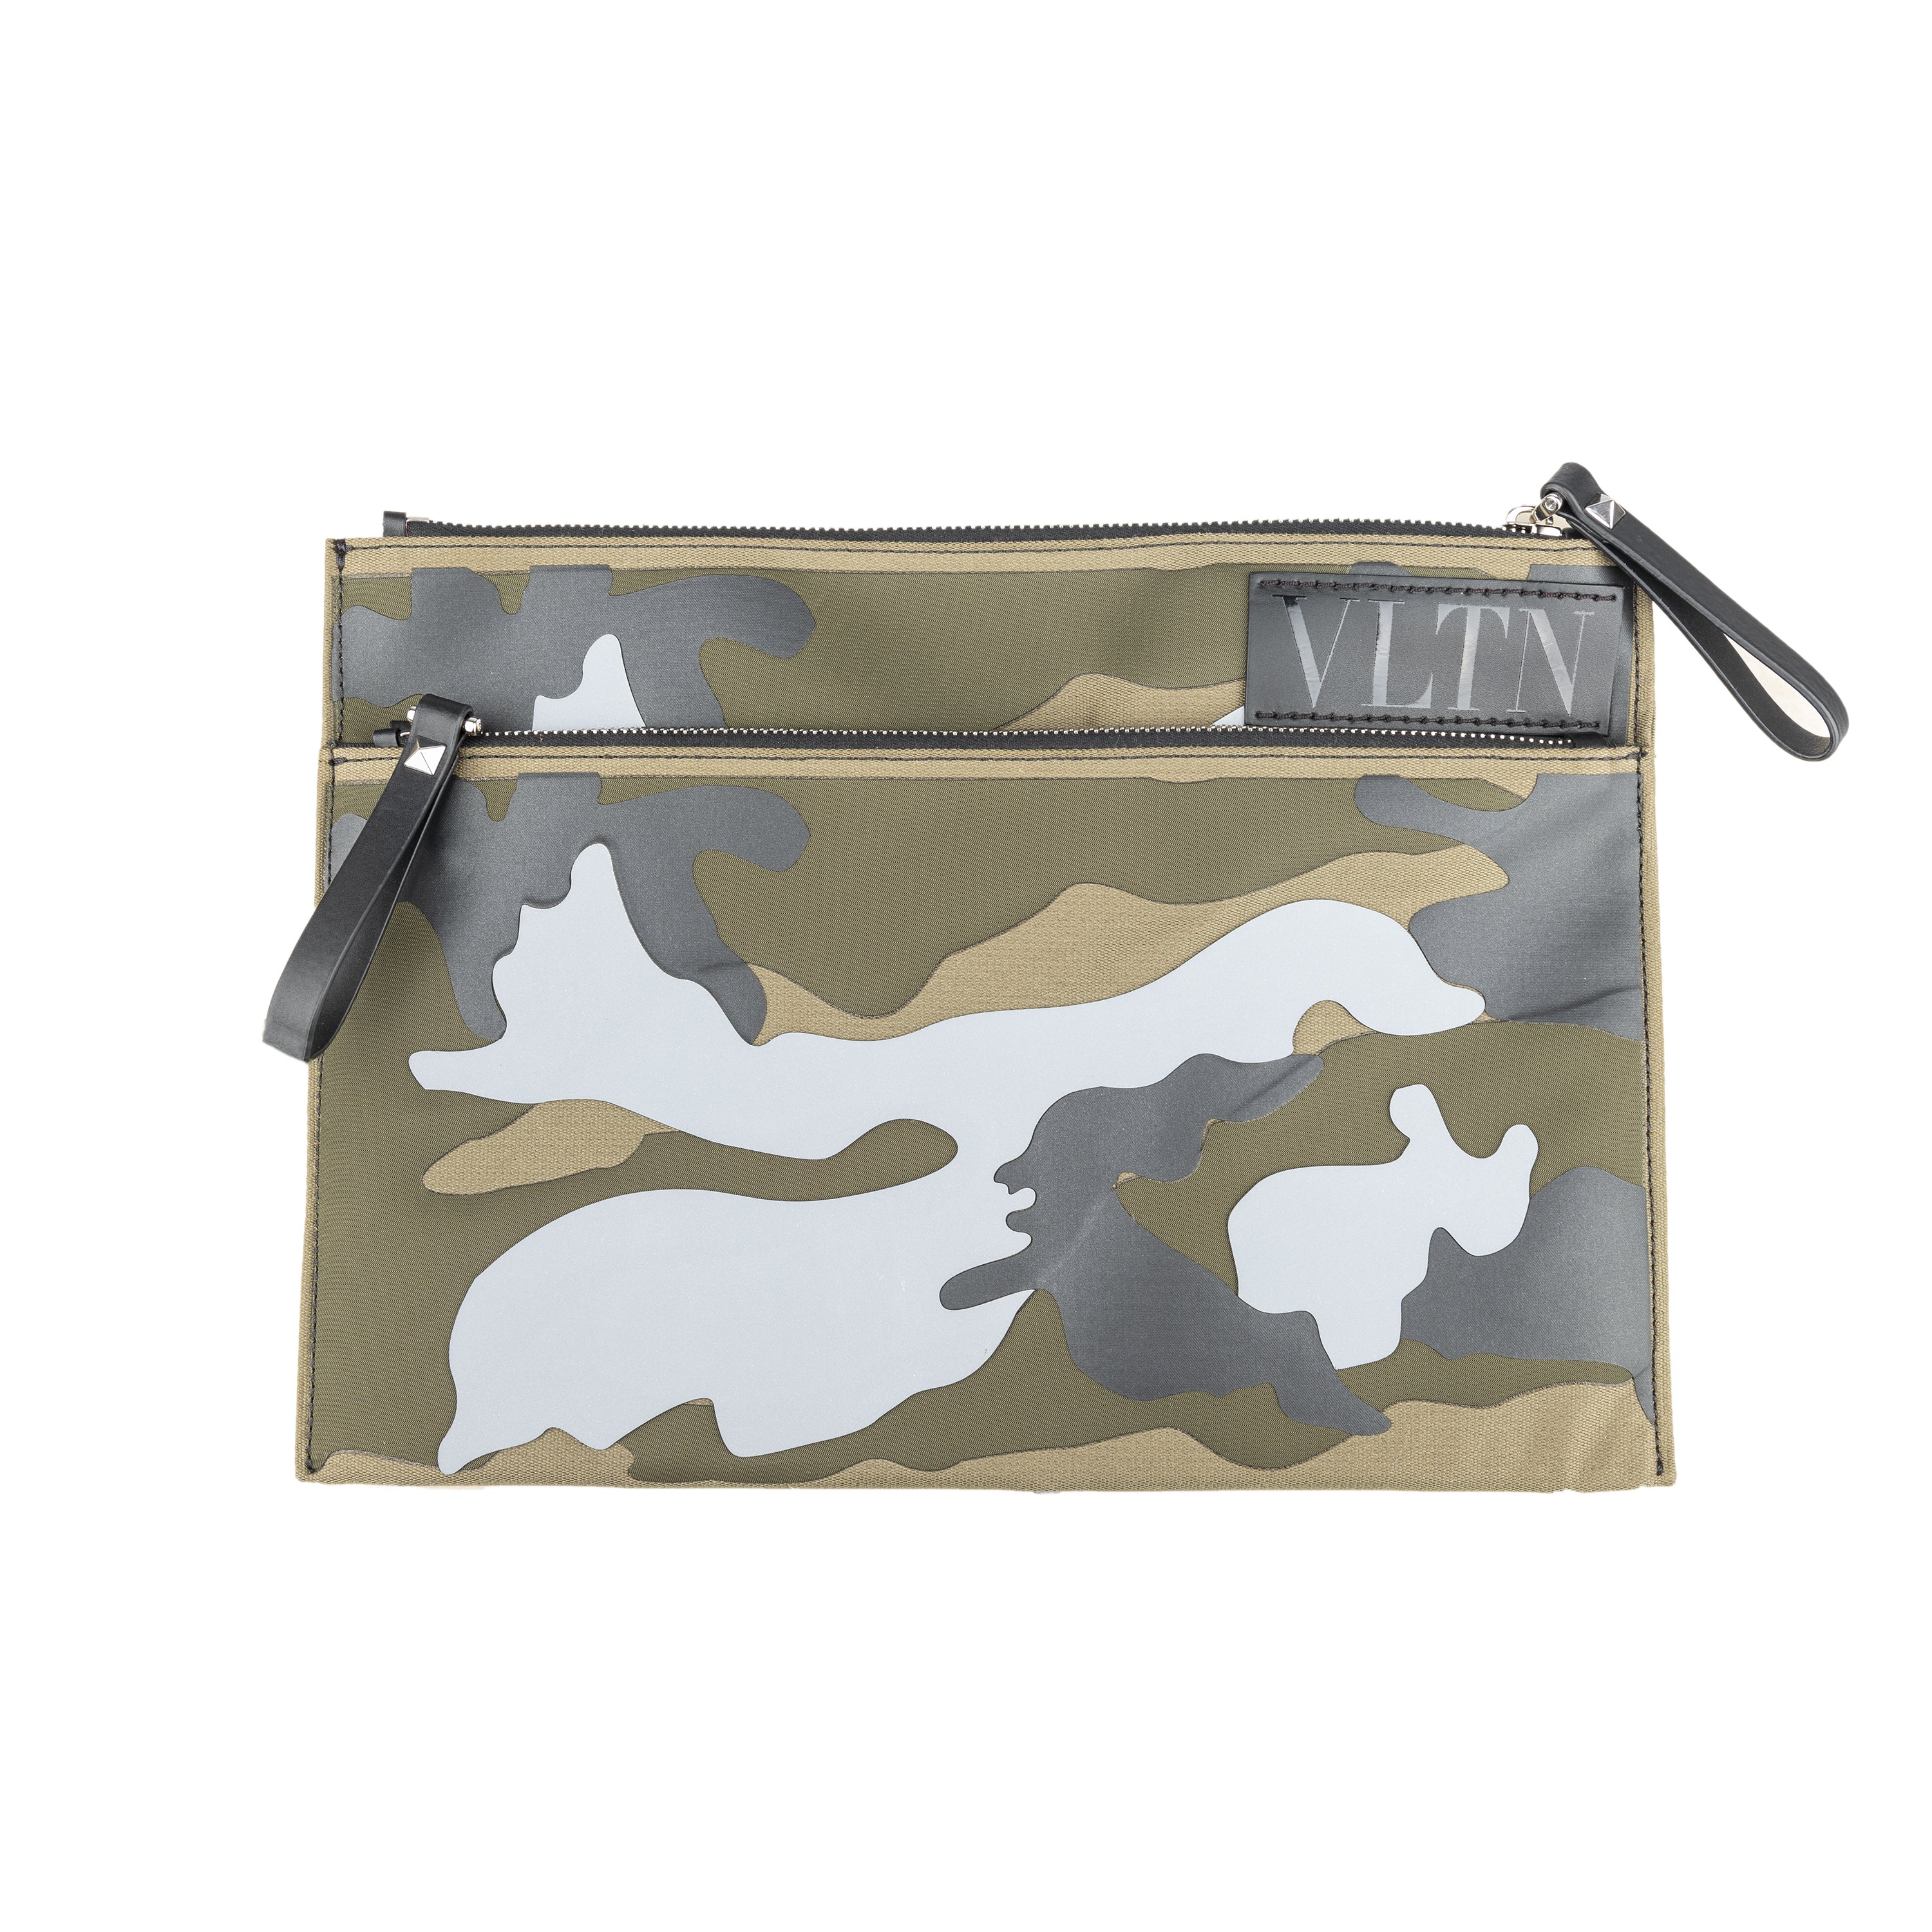 VLTN Camouflage Pouch Bag